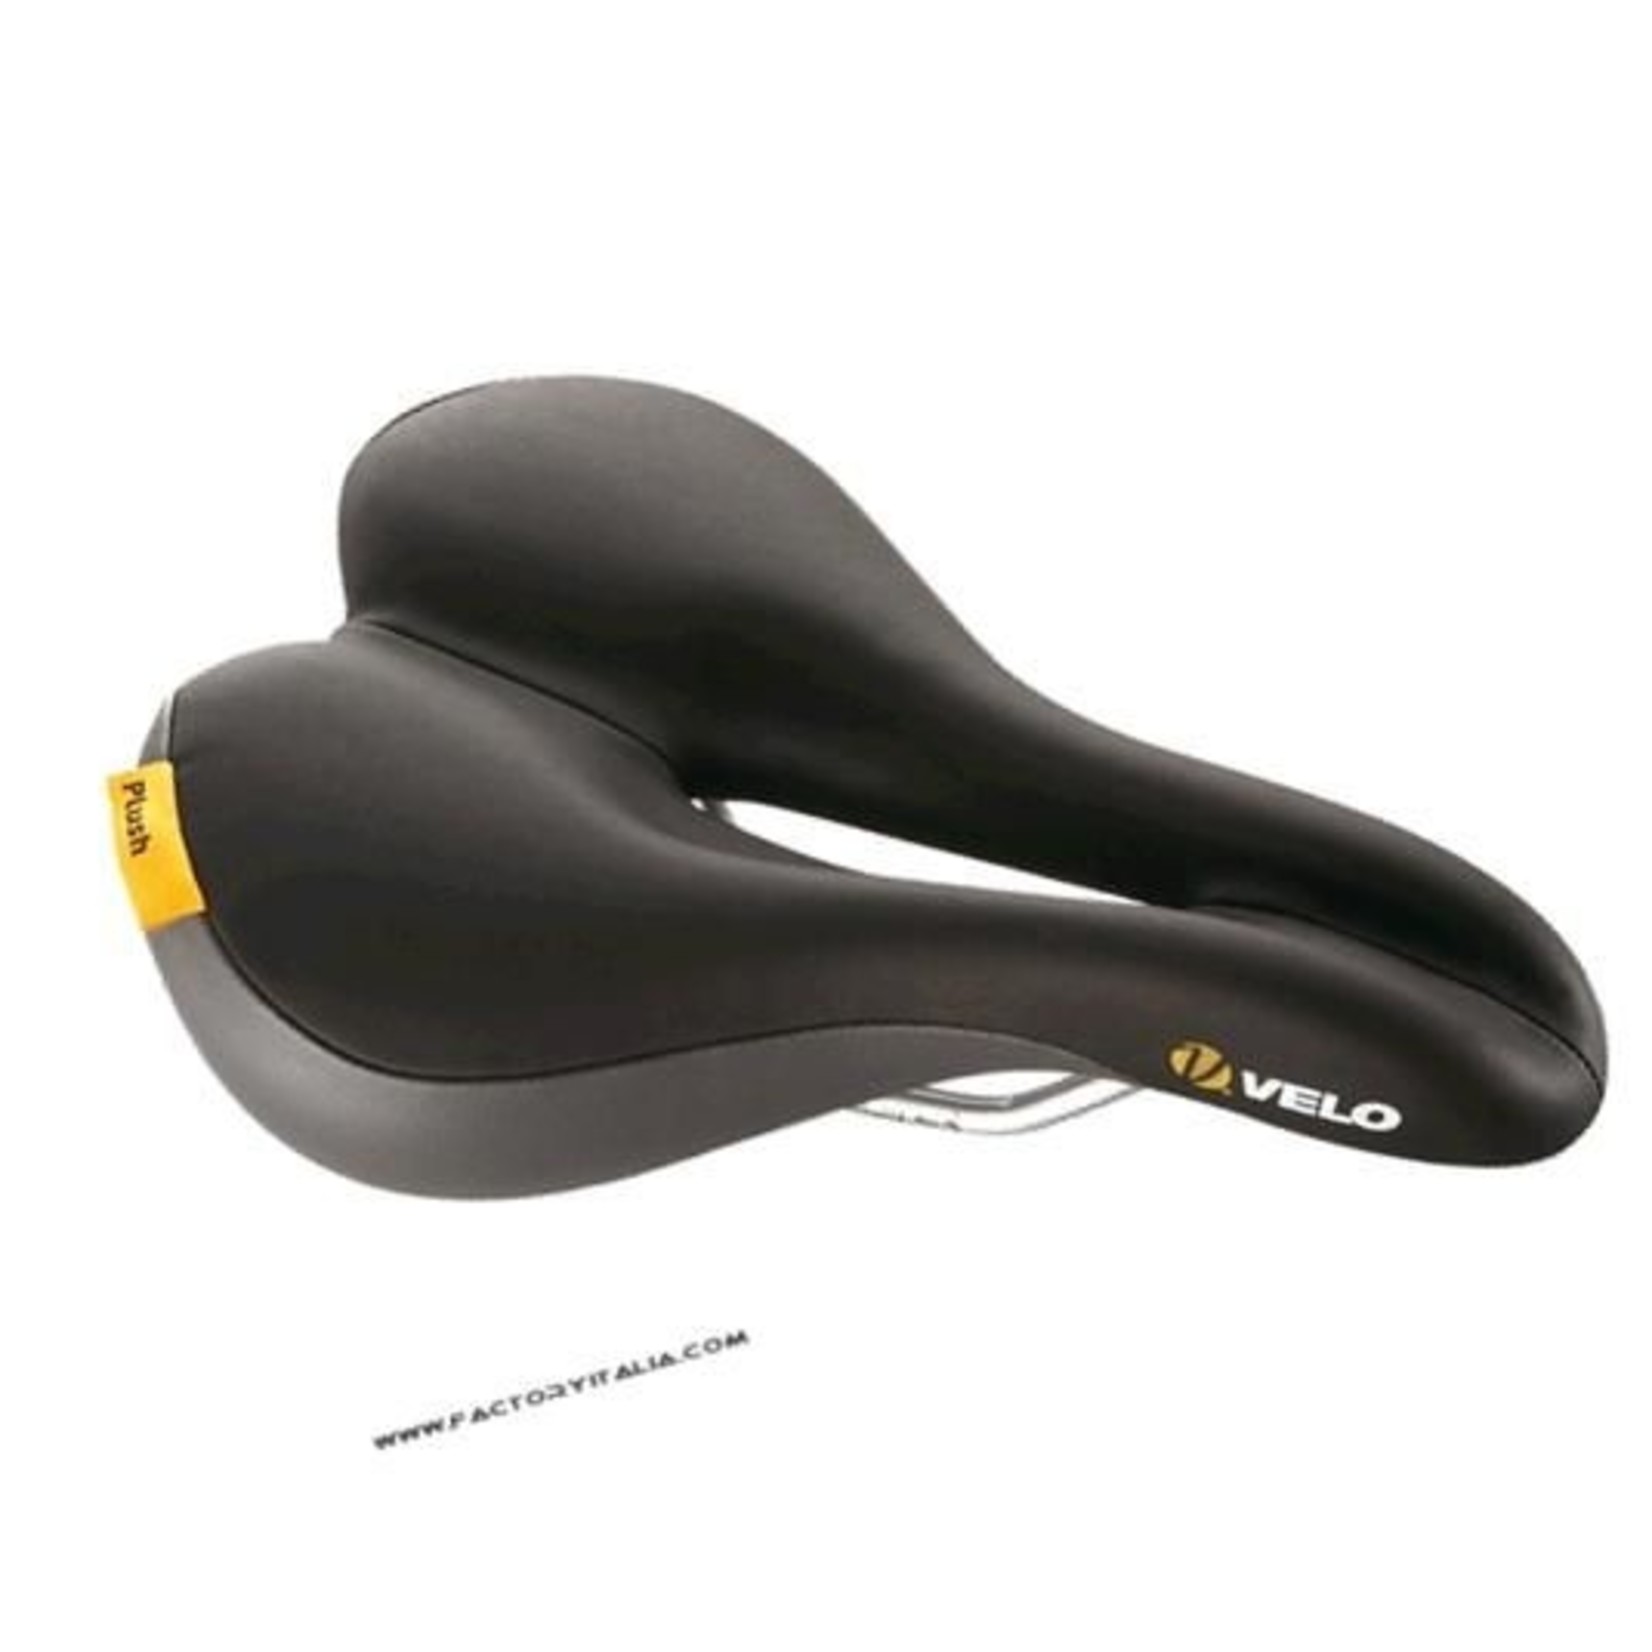 Velo Velo Bike/Cycling Saddle Plush Pump Om Cut-Out Touring 411G - 273mm X 179mm